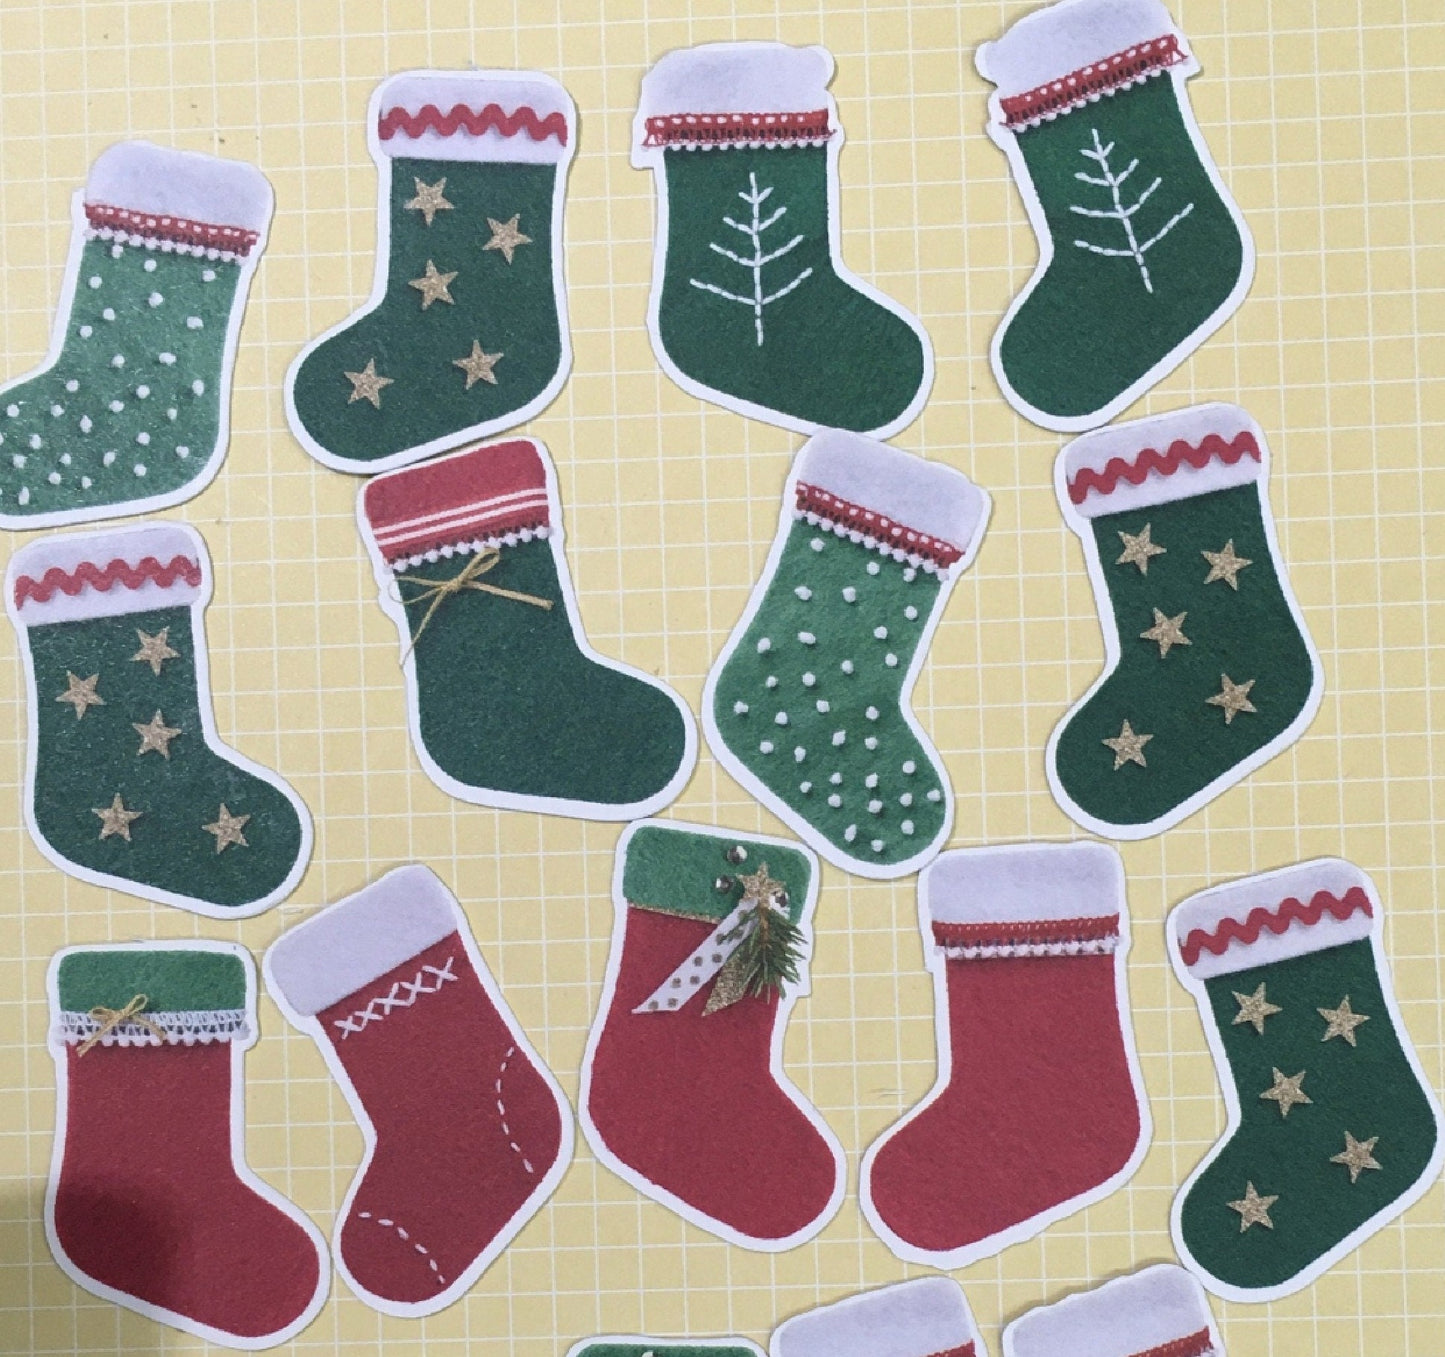 Stampin' UP! Retired Designer Series Paper - Die Cut Pack - Christmas Stockings